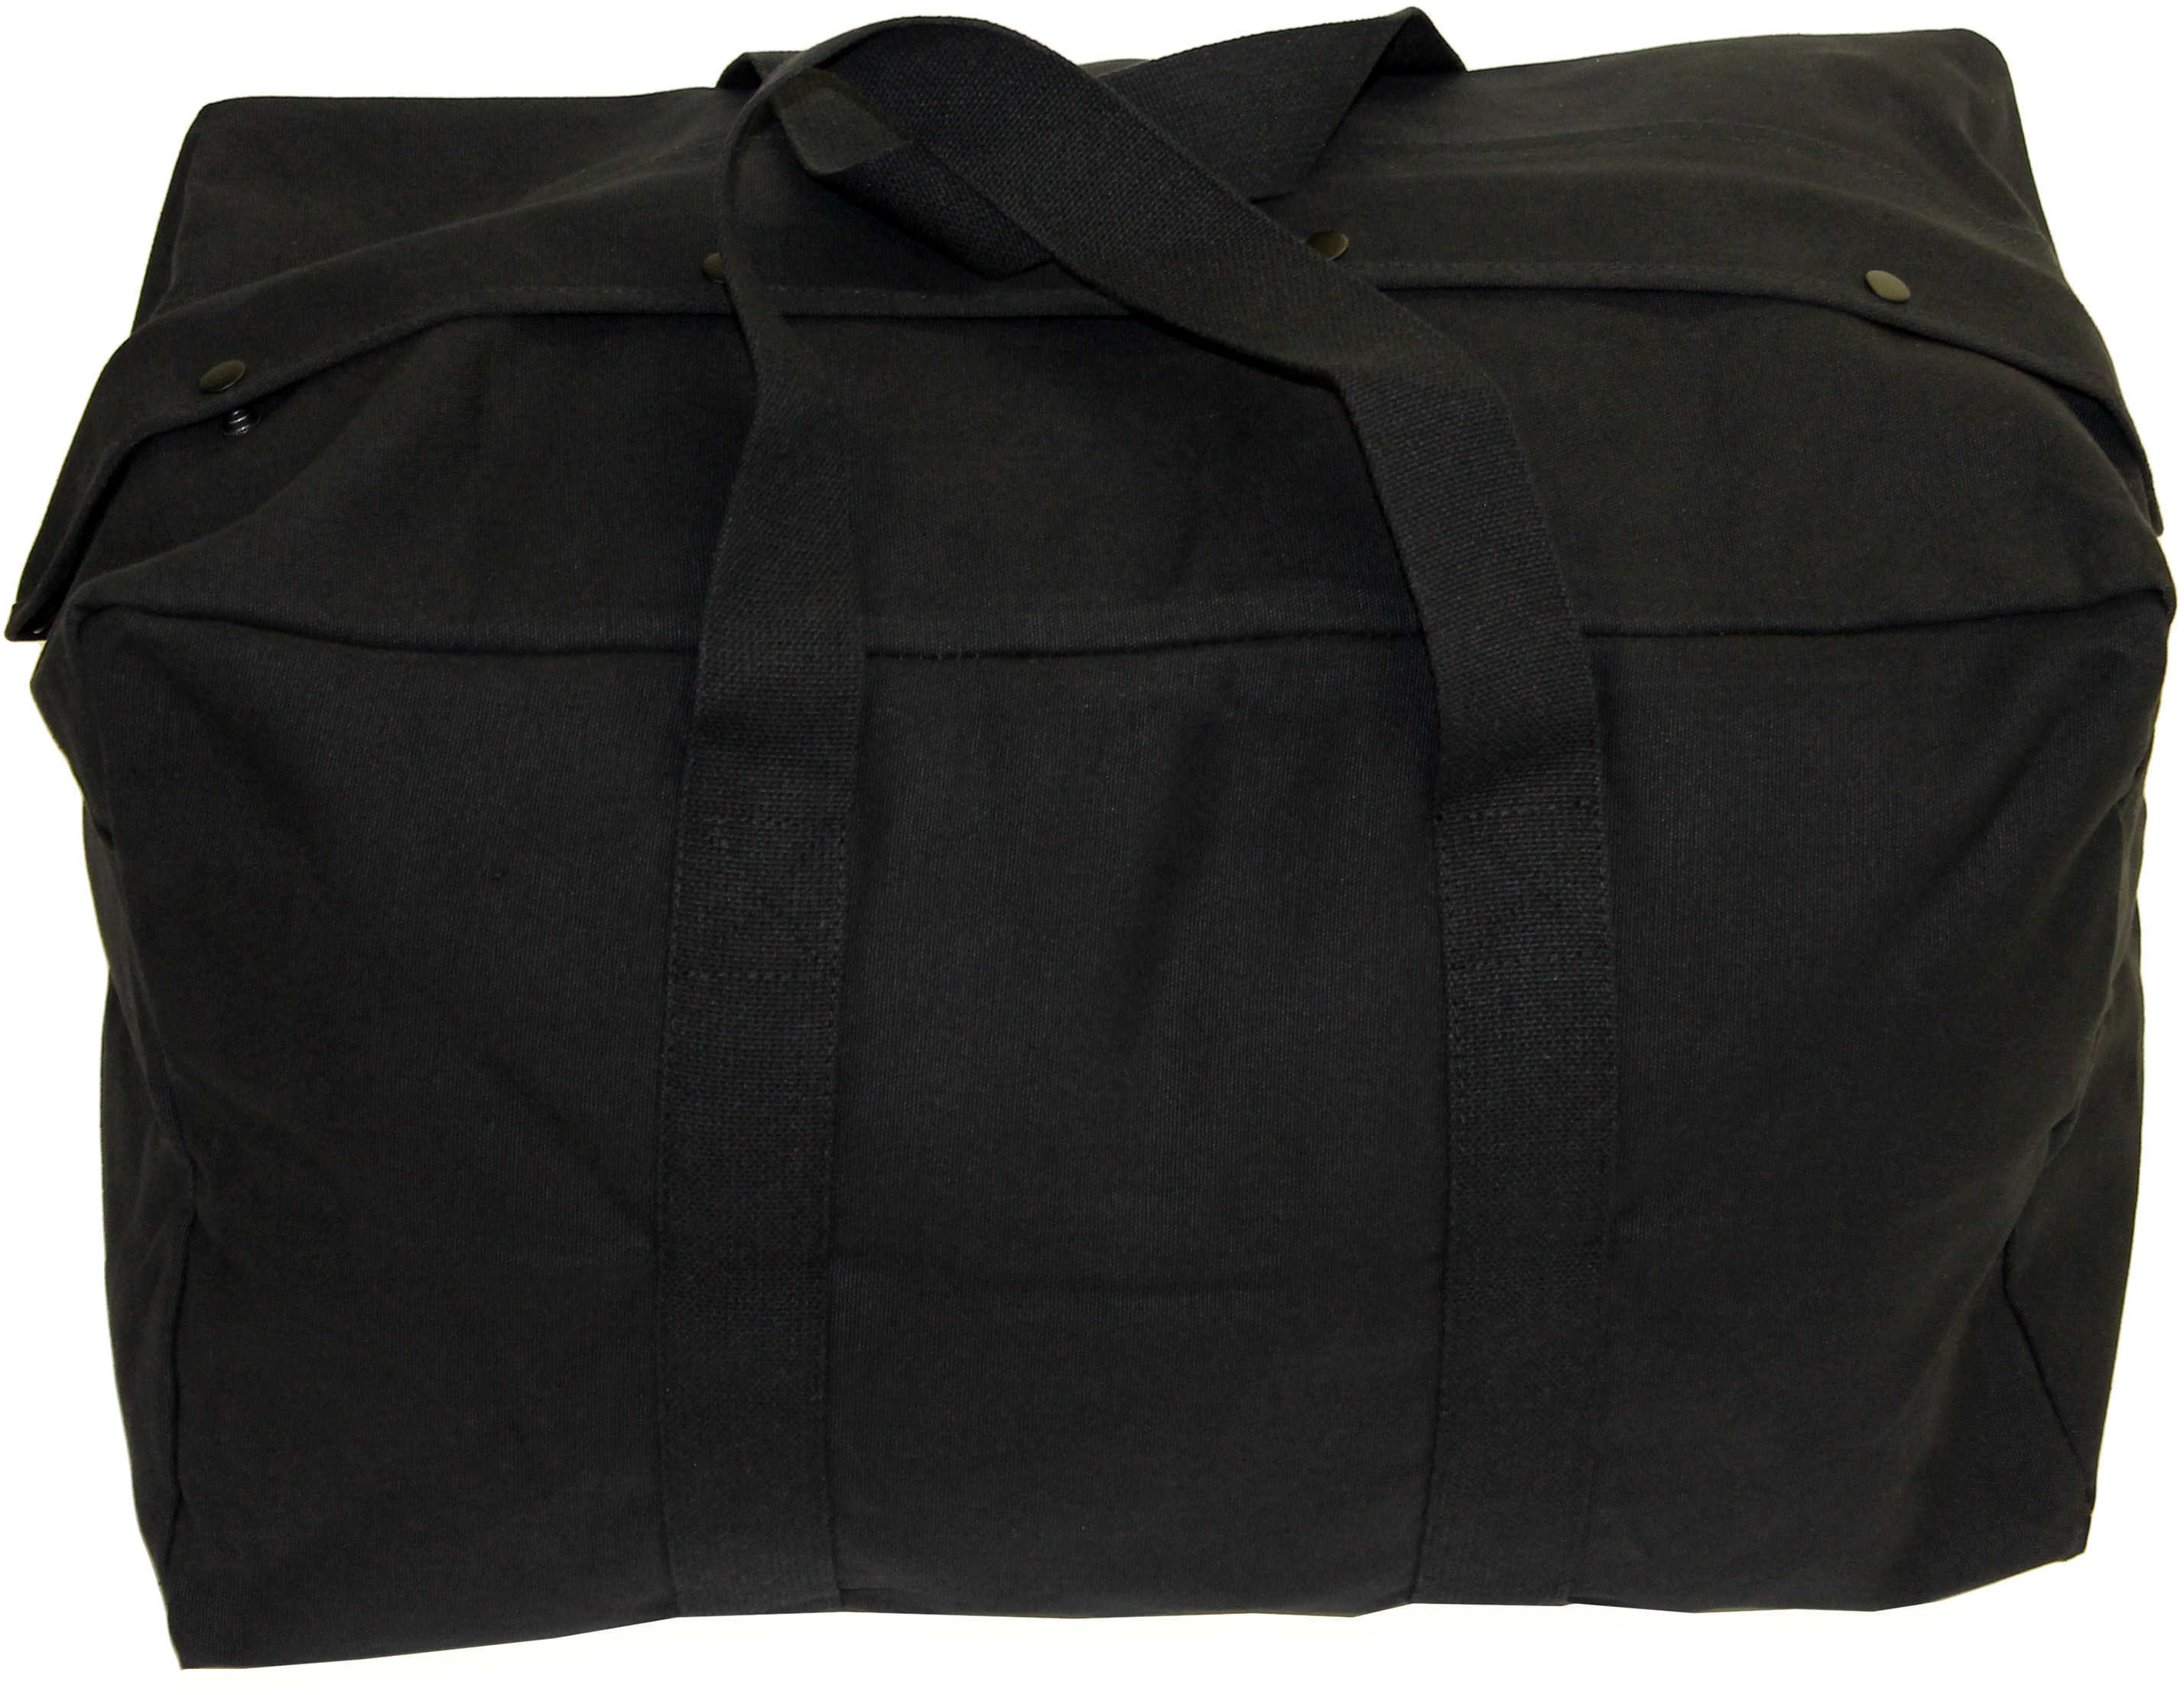 Tex Sport Canvas Parachute Bag Black - 24" x 15" x 13" - Heavy-duty full length zipper with snap flap closure 11860